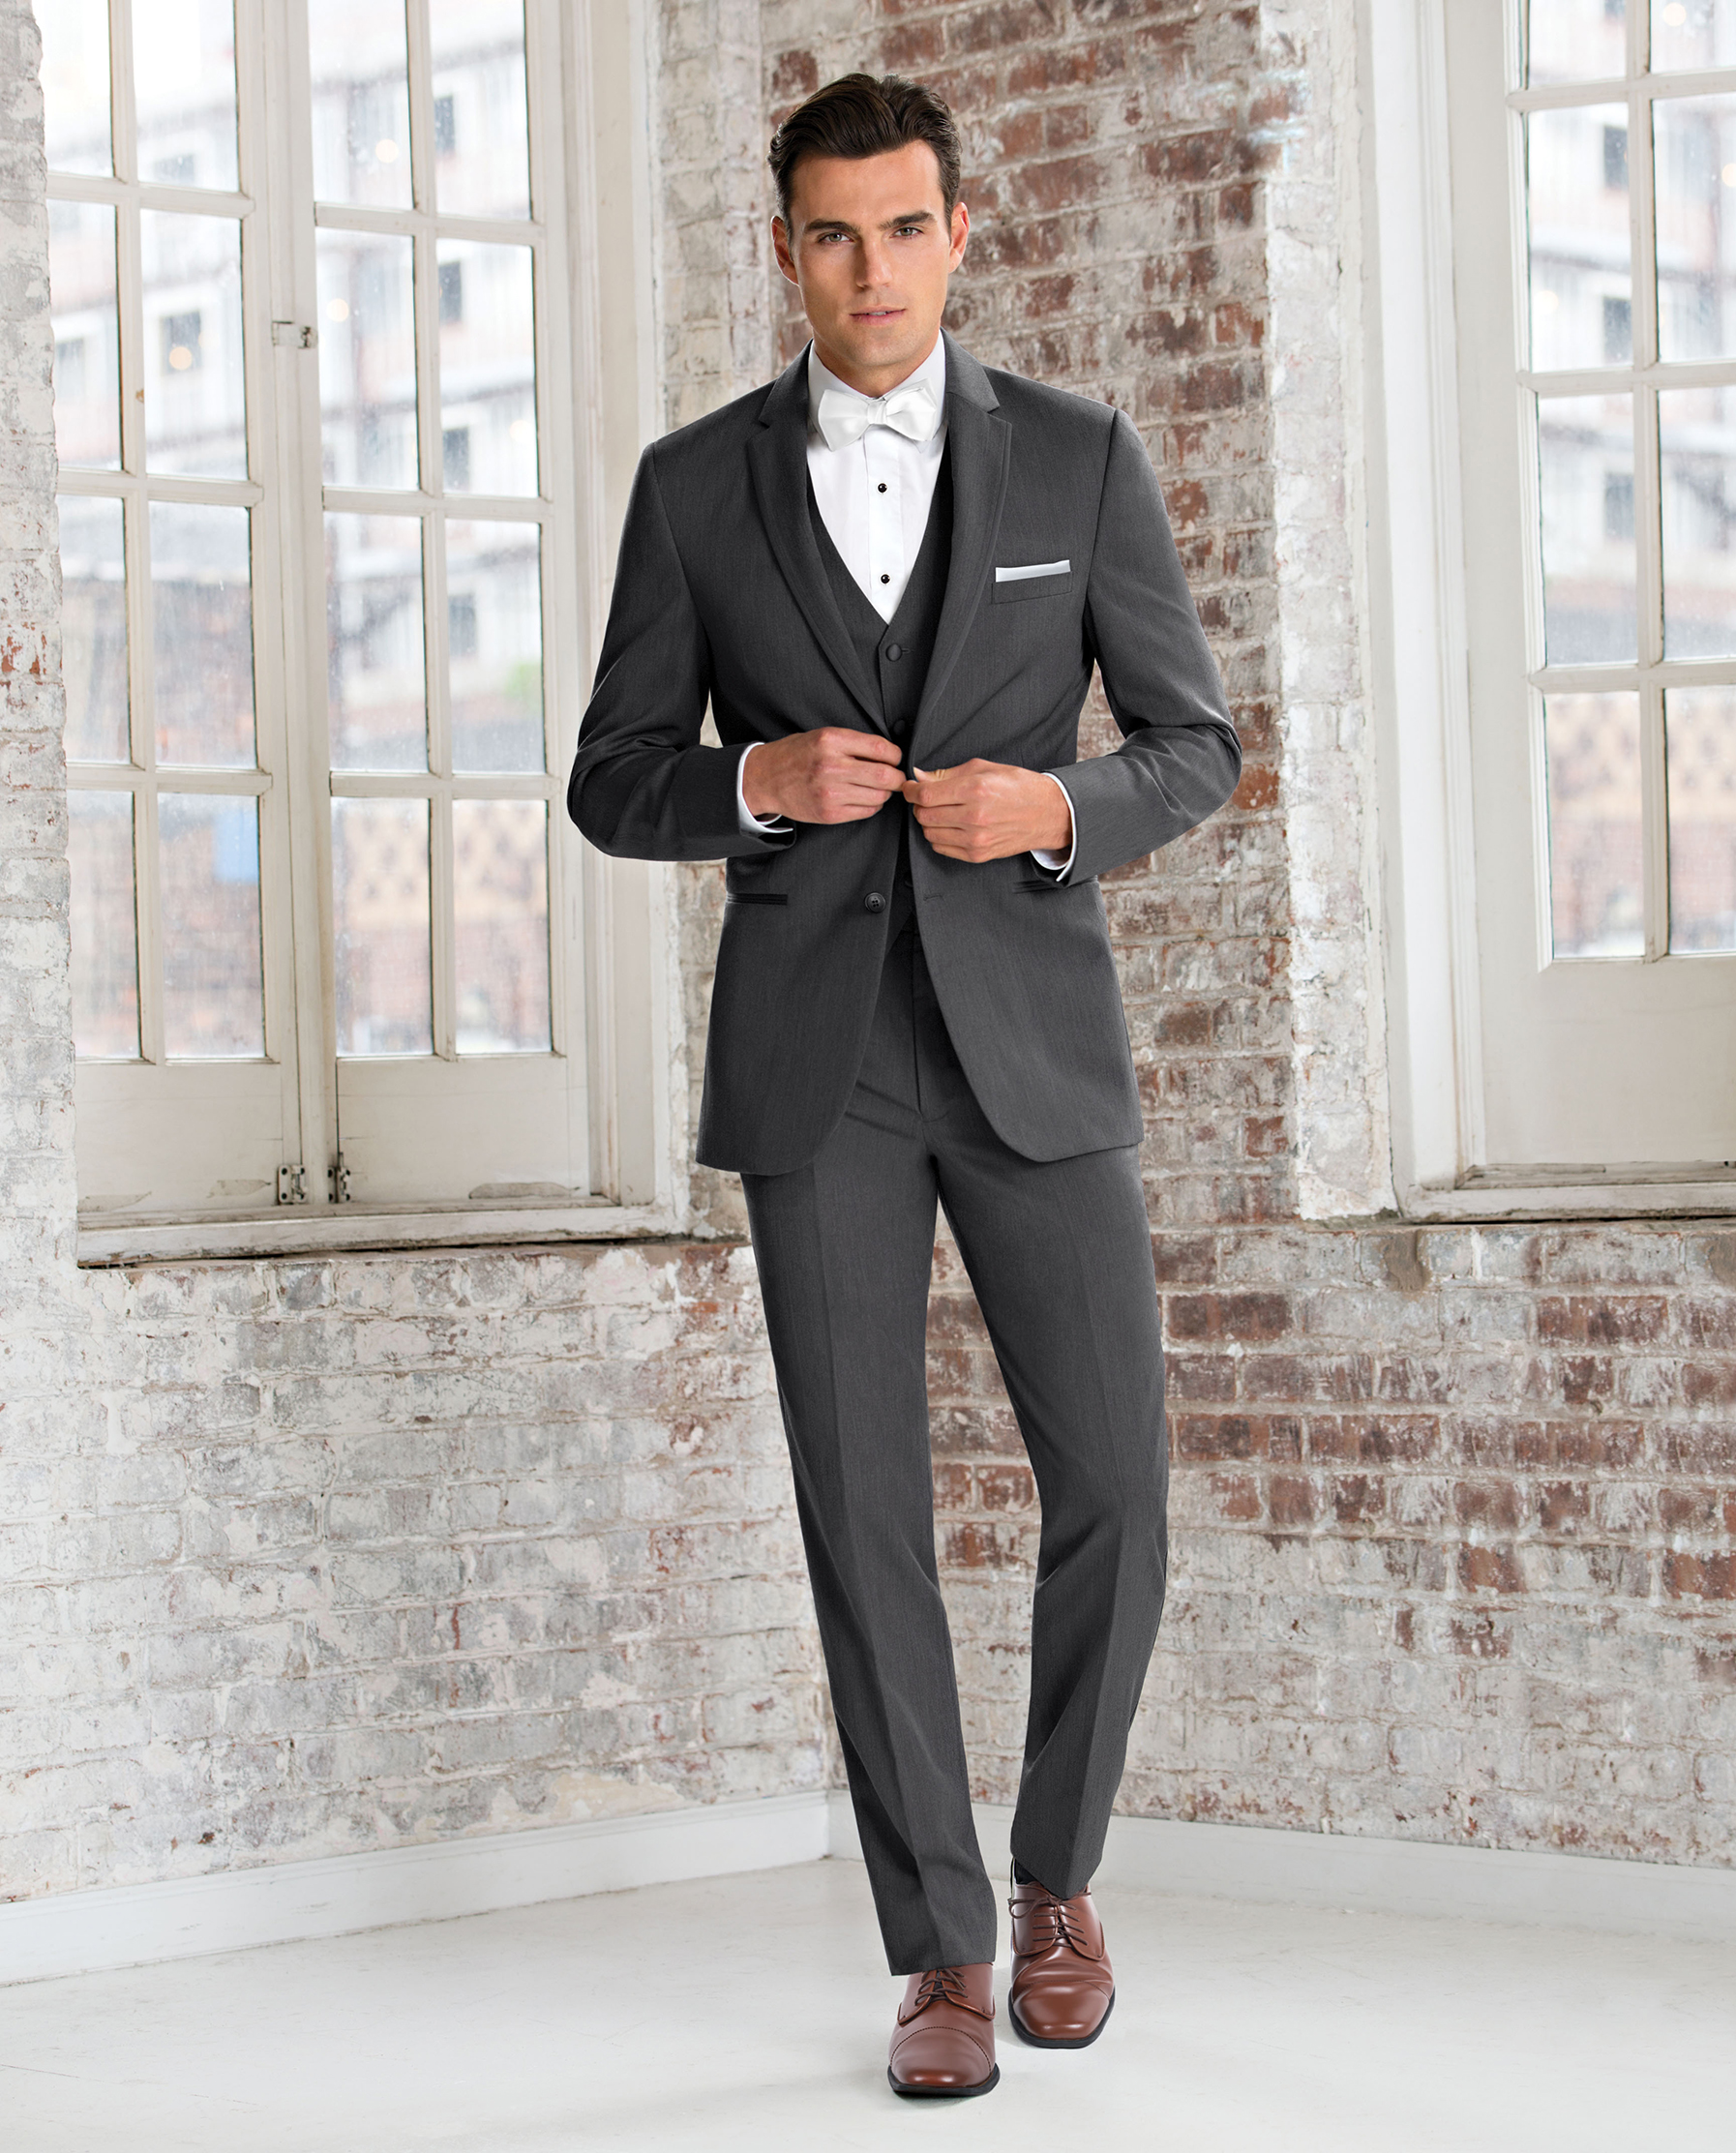 400 Michael Kors Men039s Wool Grey MiniStriped 38R Modern Fit Suit  Jacket Blazer  eBay